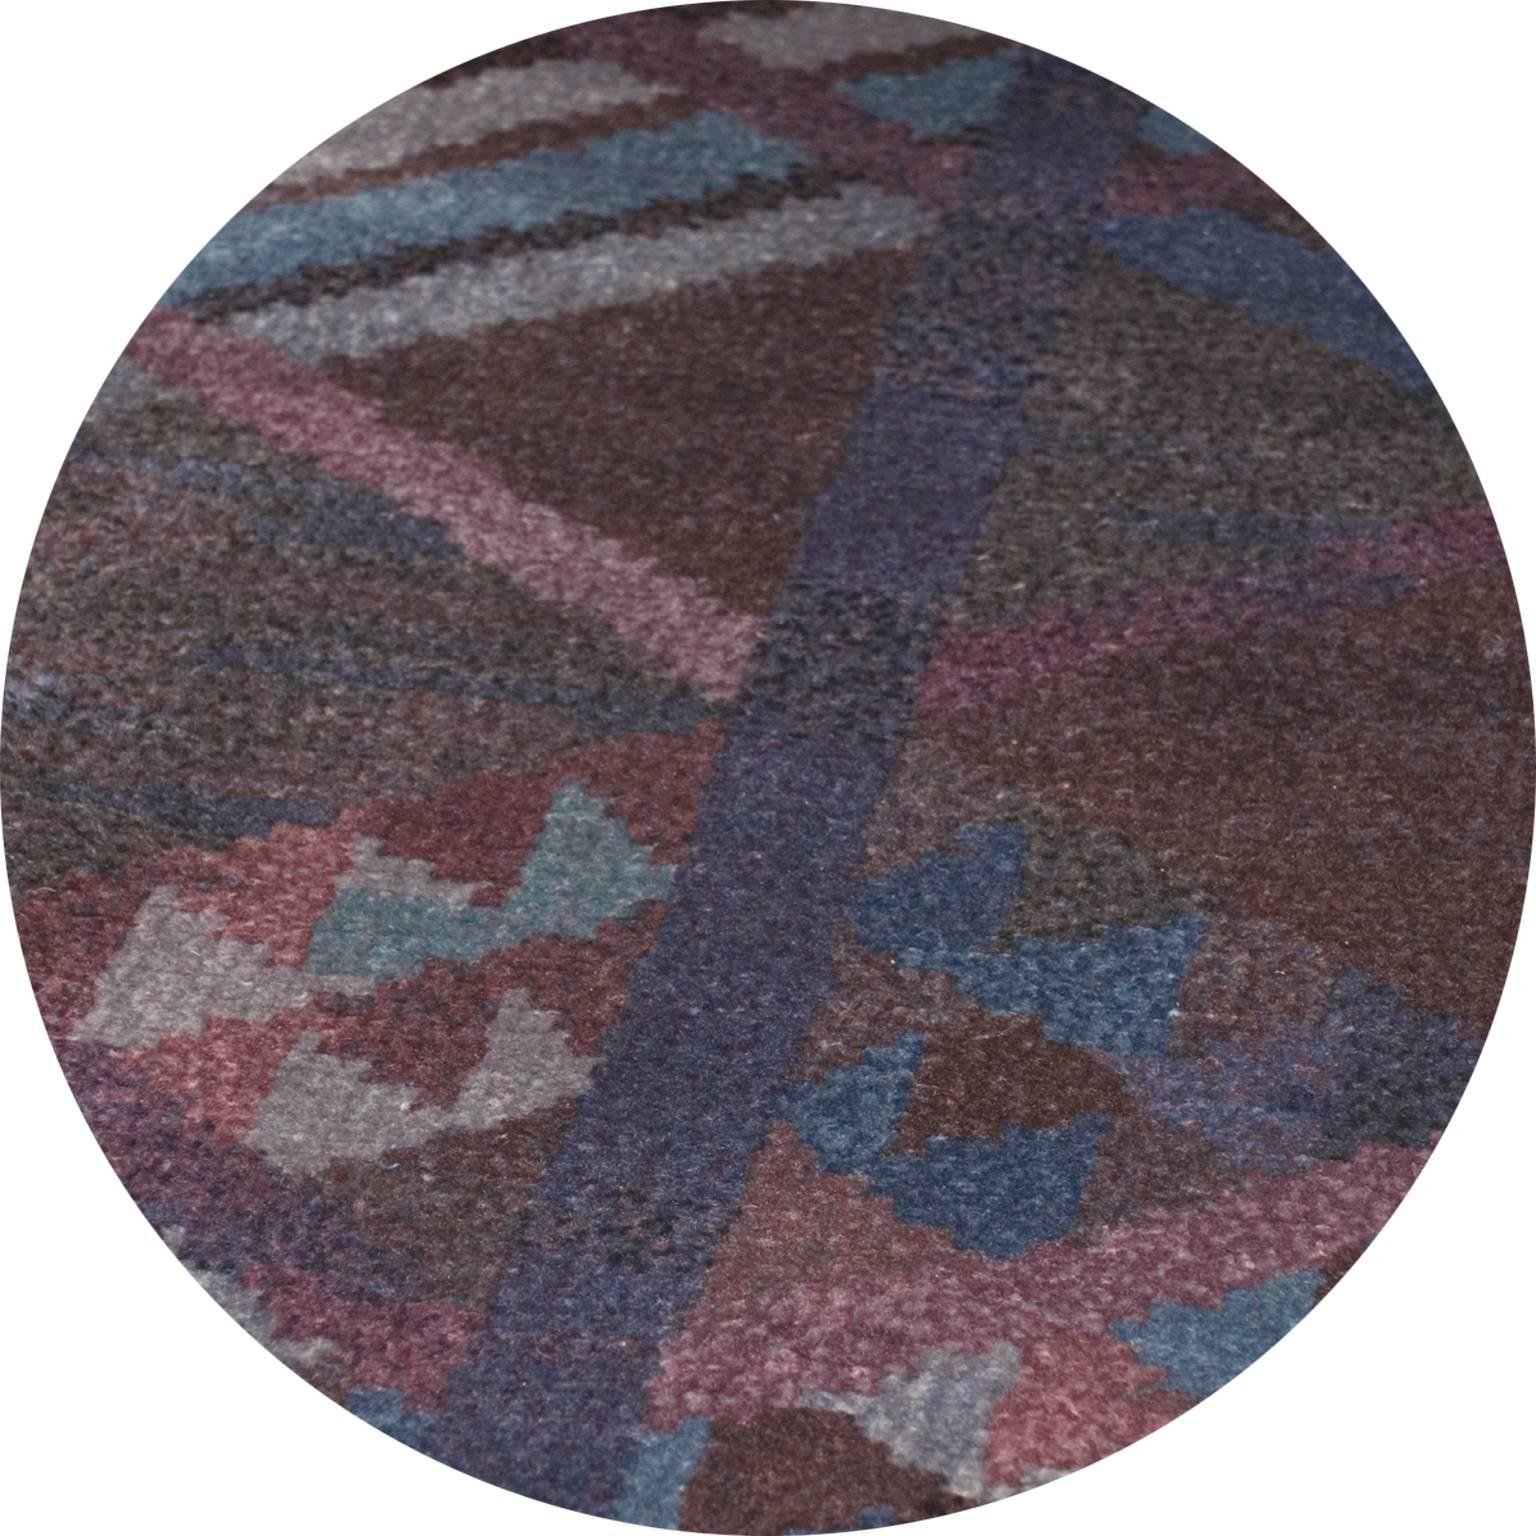 Swedish Carpet by Marianne Richter, 